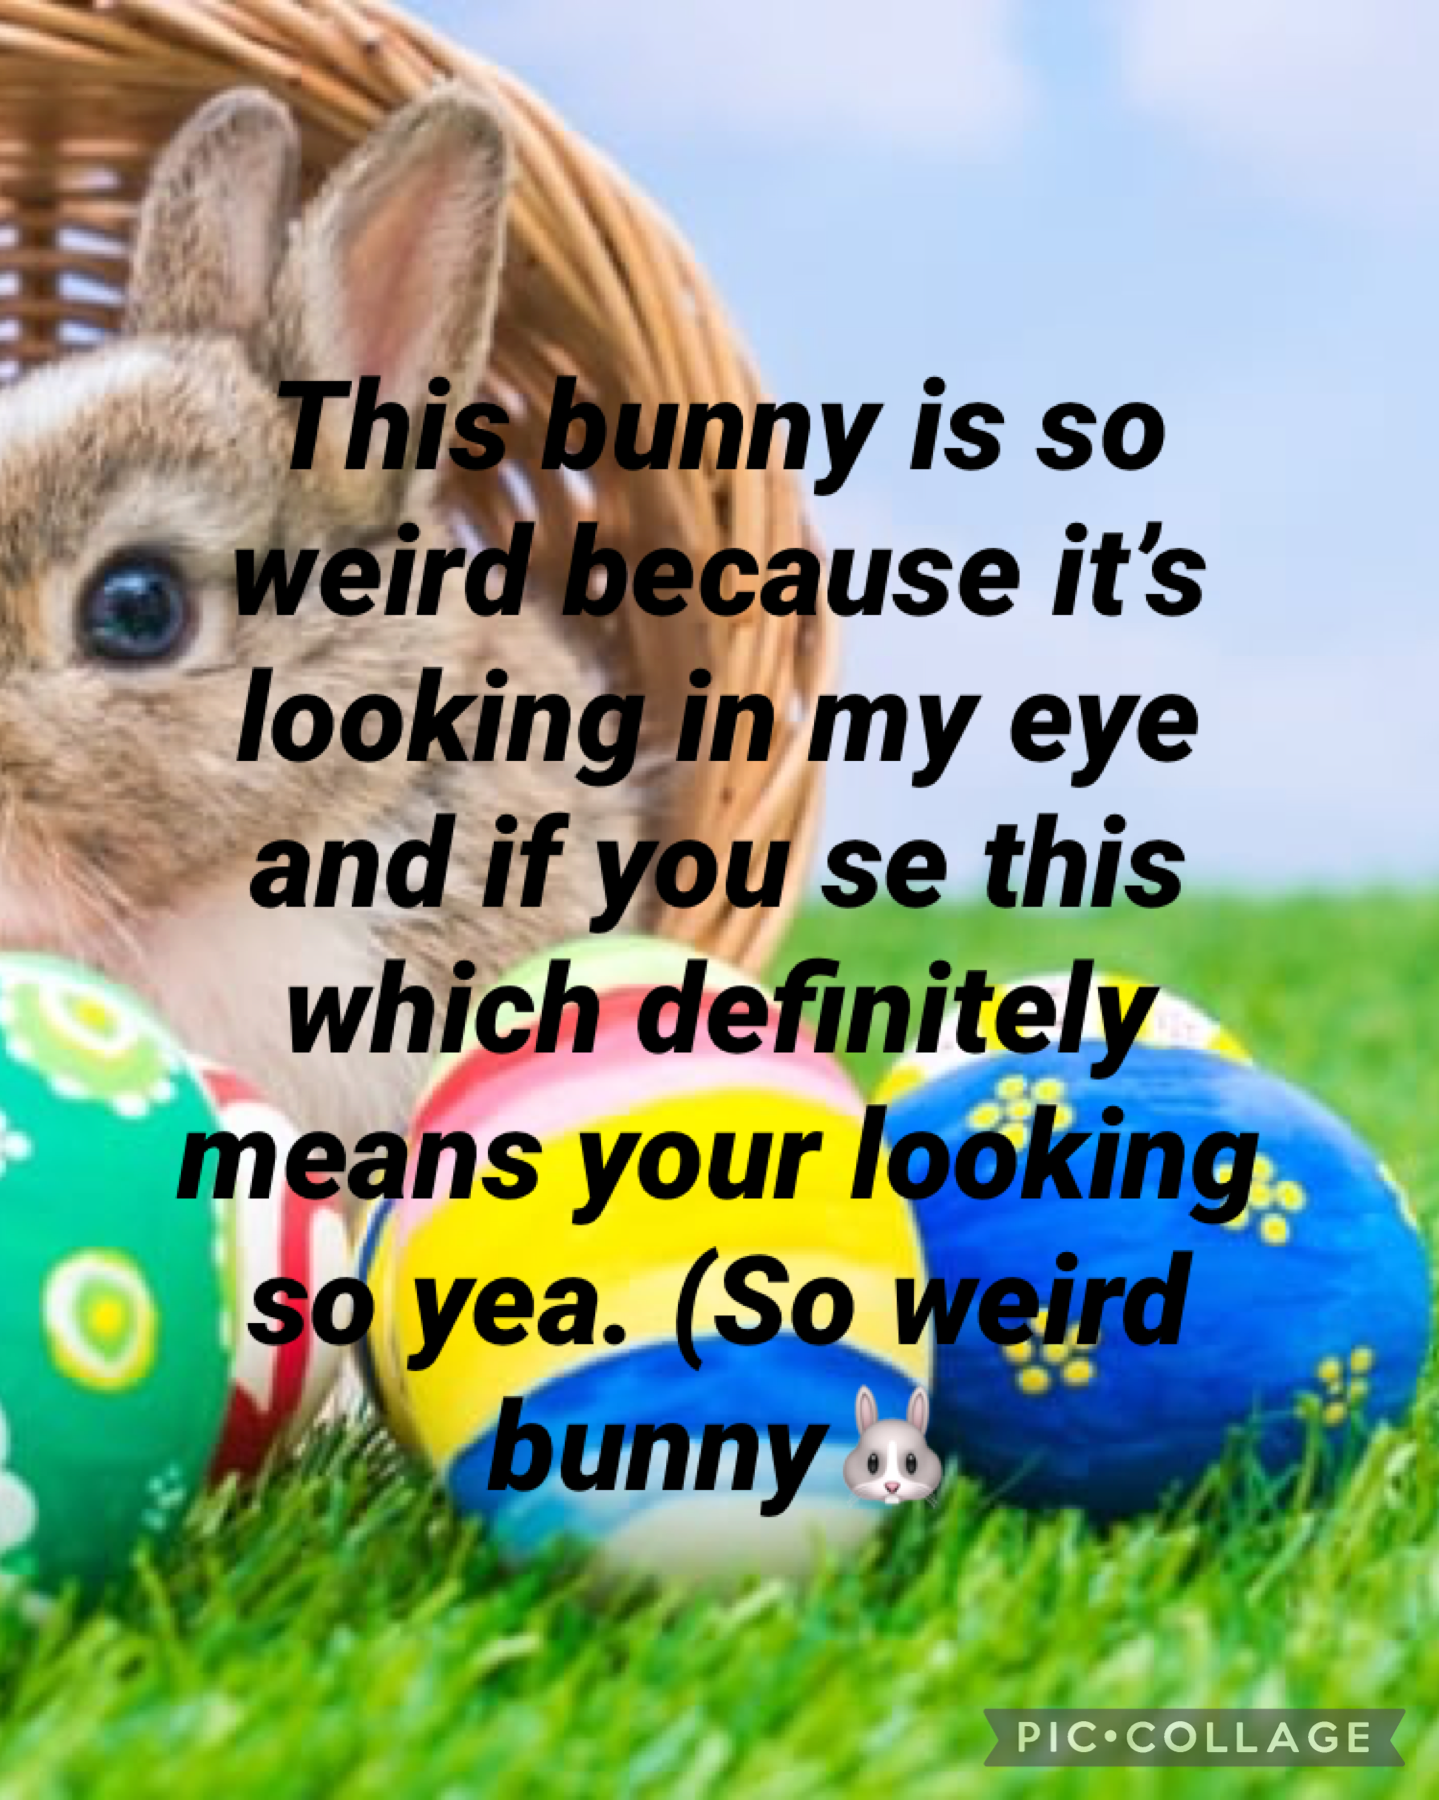 Easter bunny’s are so weird